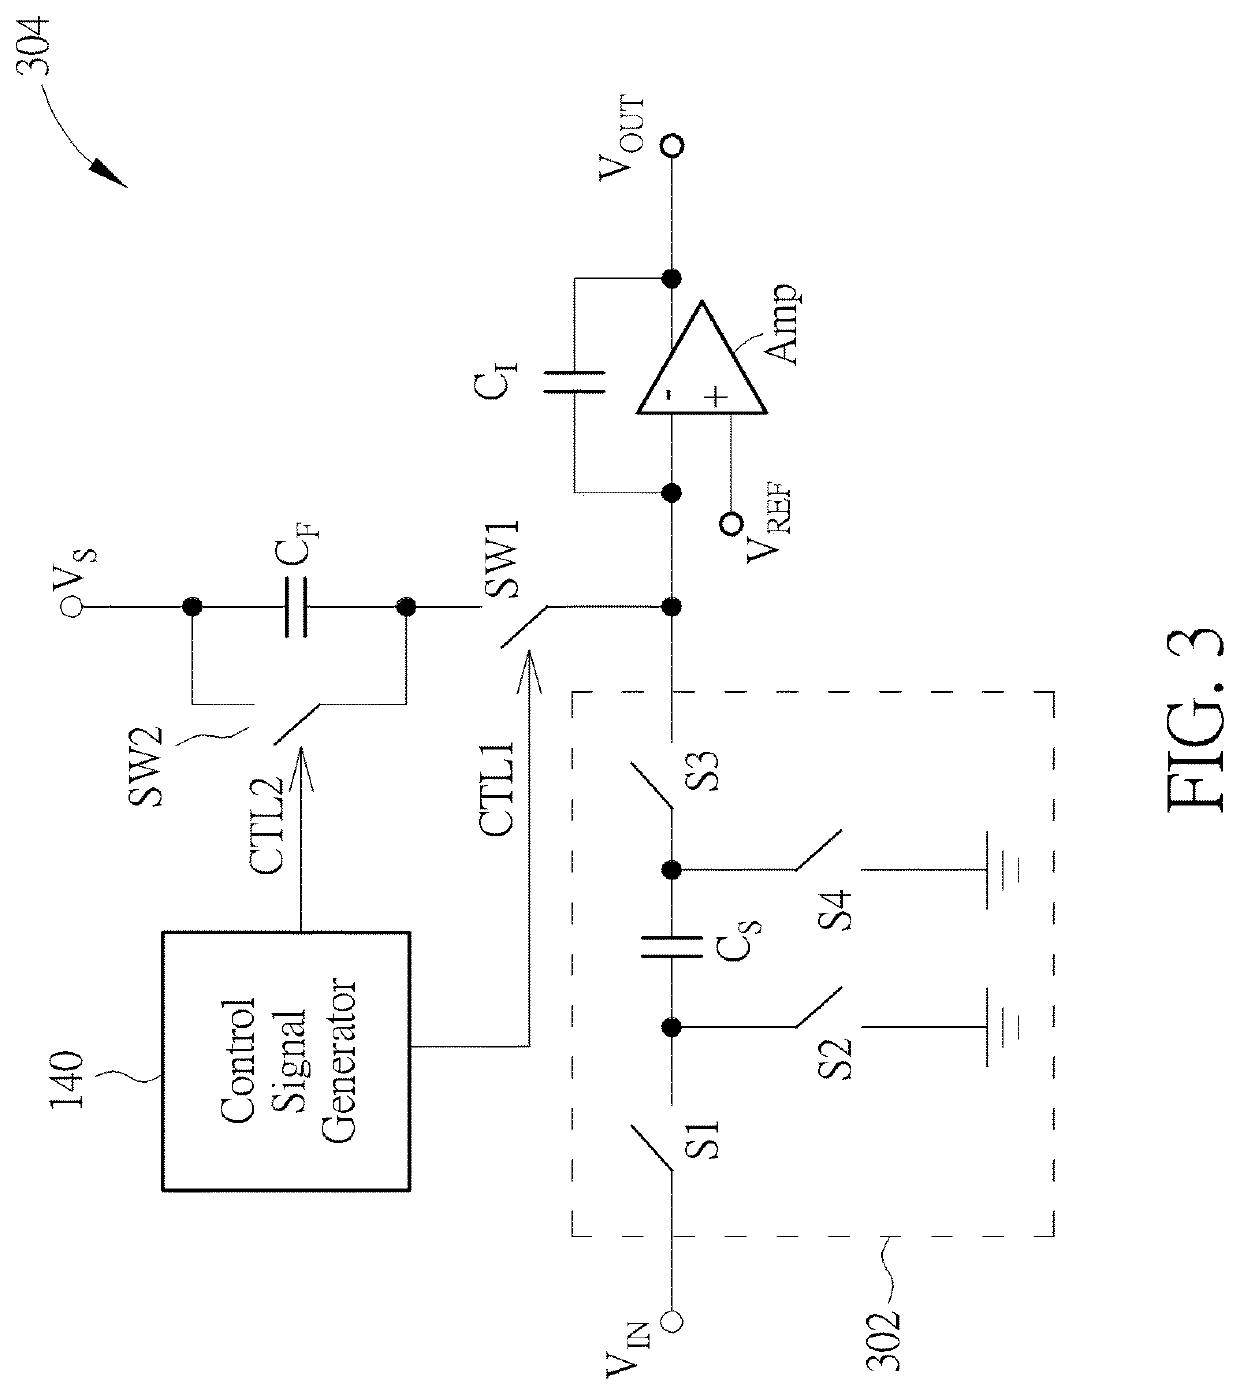 Integrating circuit and capacitance sensing circuit